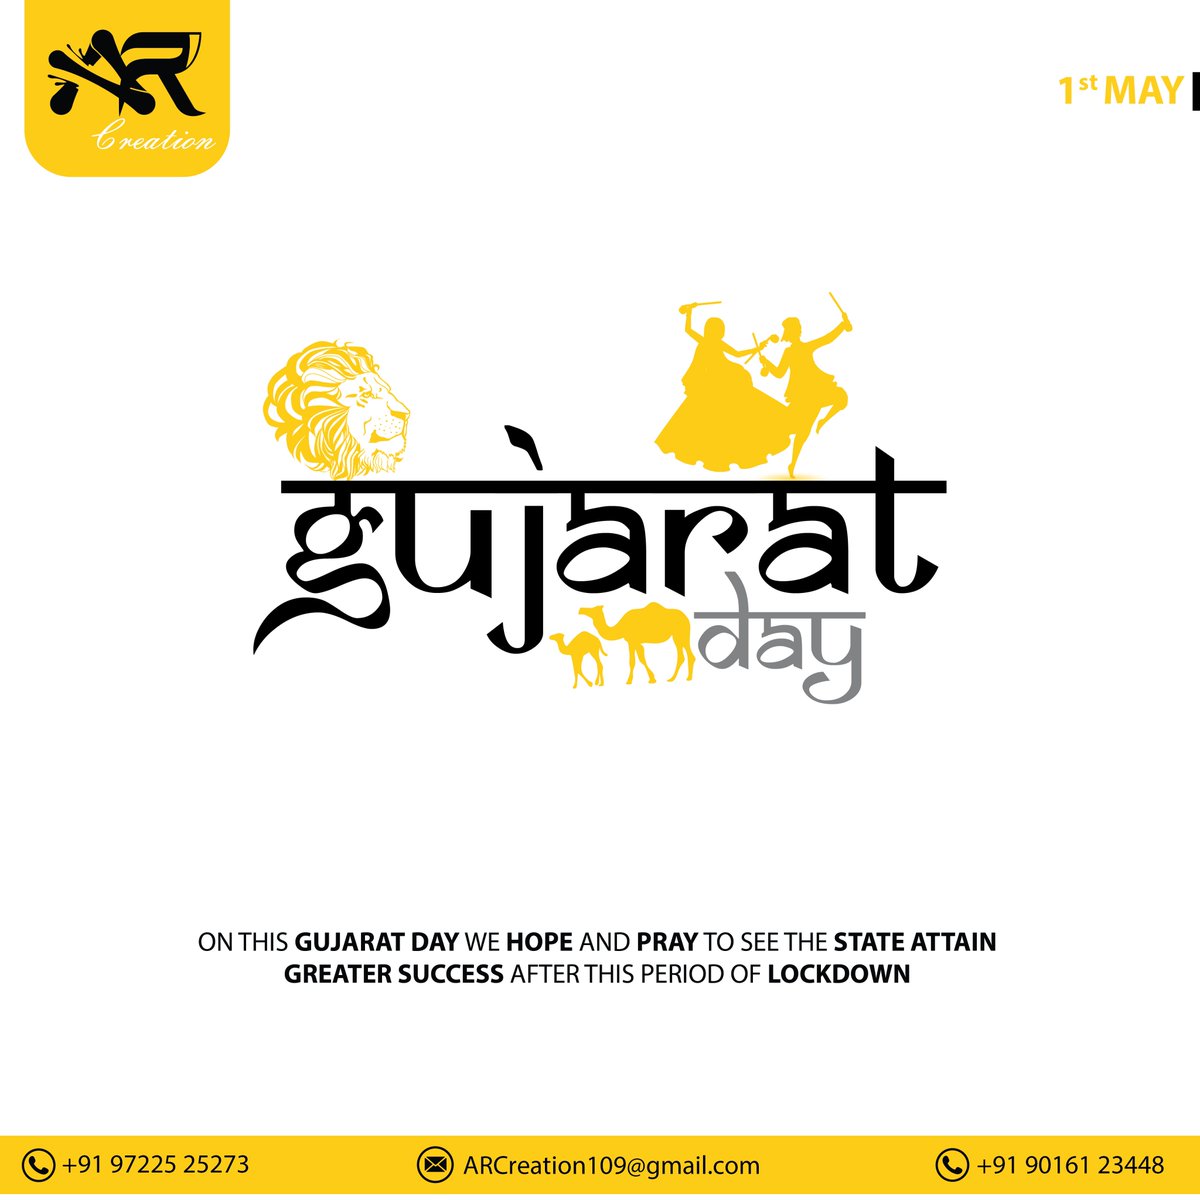 Gujarat day

#marketing #gujarat #GujaratDay  #digitalmarketing #socialmediamarketing #business #brandingexpert #seo #smo #lockdown #arcreation #designing  #ideas #corporatebranding  #graphicdesigning